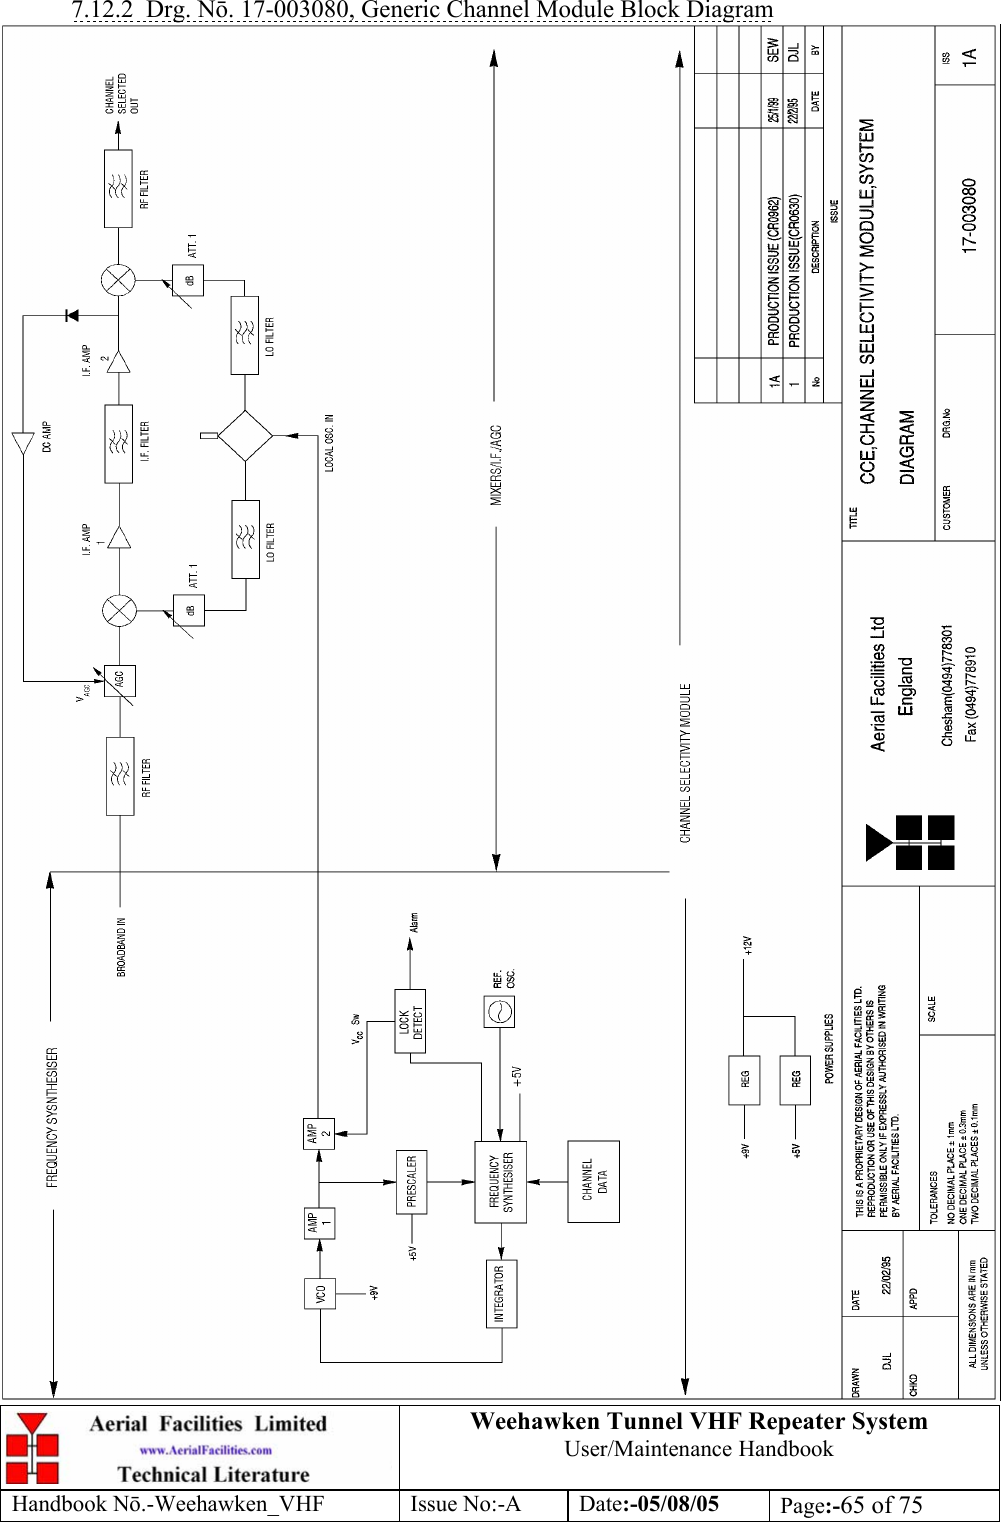  Weehawken Tunnel VHF Repeater System User/Maintenance Handbook Handbook N.-Weehawken_VHF Issue No:-A Date:-05/08/05  Page:-65 of 75  7.12.2 Drg. N. 17-003080, Generic Channel Module Block Diagram  